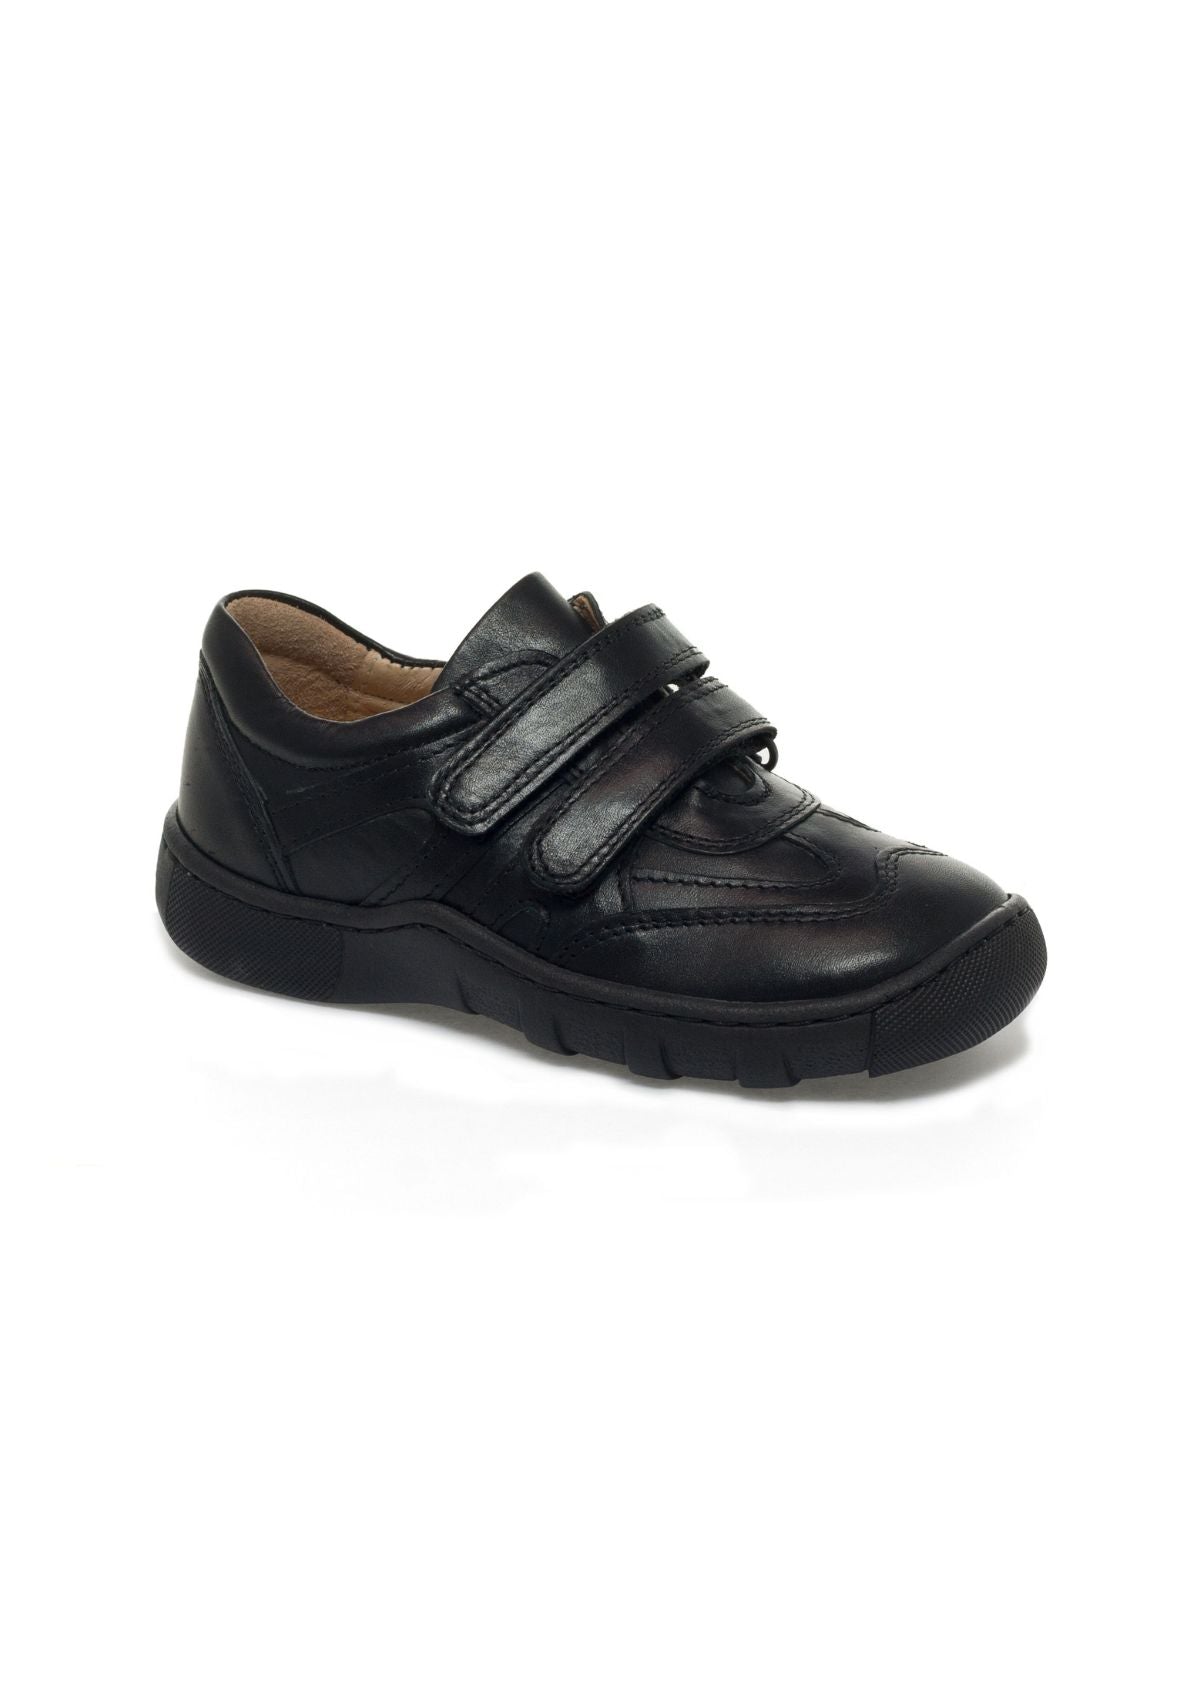 Boys School Shoe-Petasil-Victor (Black Leather) Side View